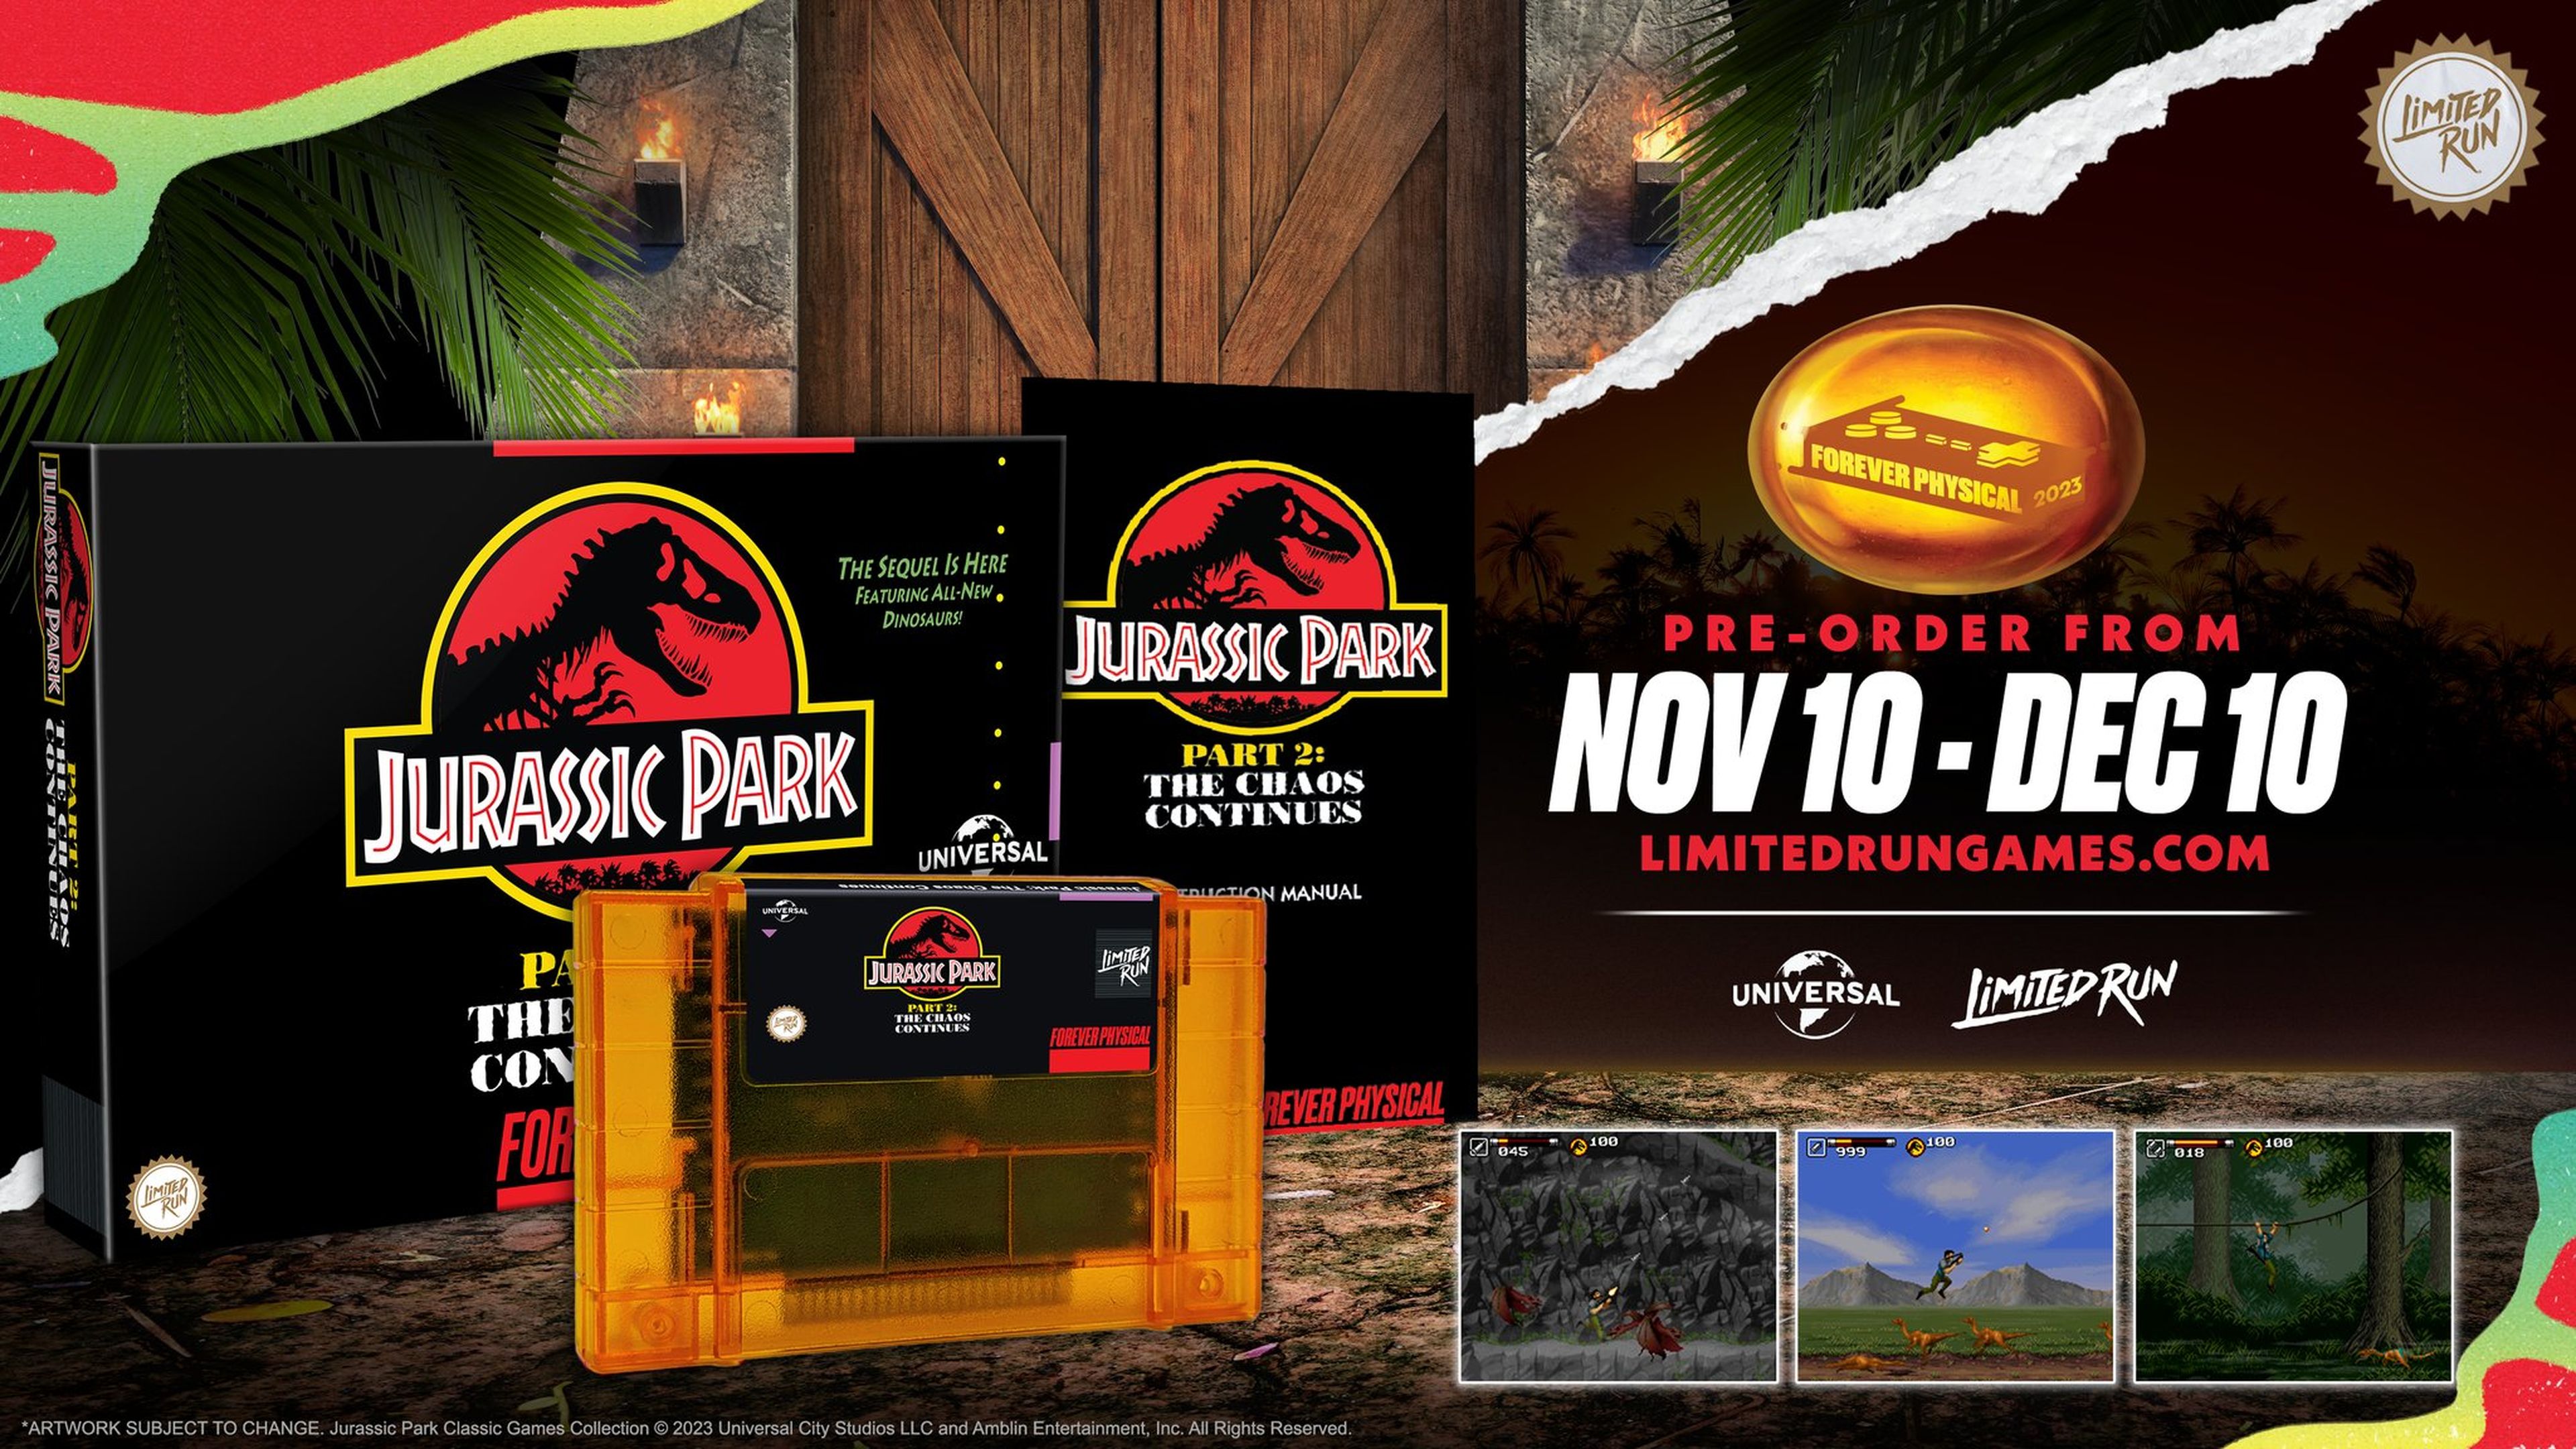 Jurassic Park Limited Run Games